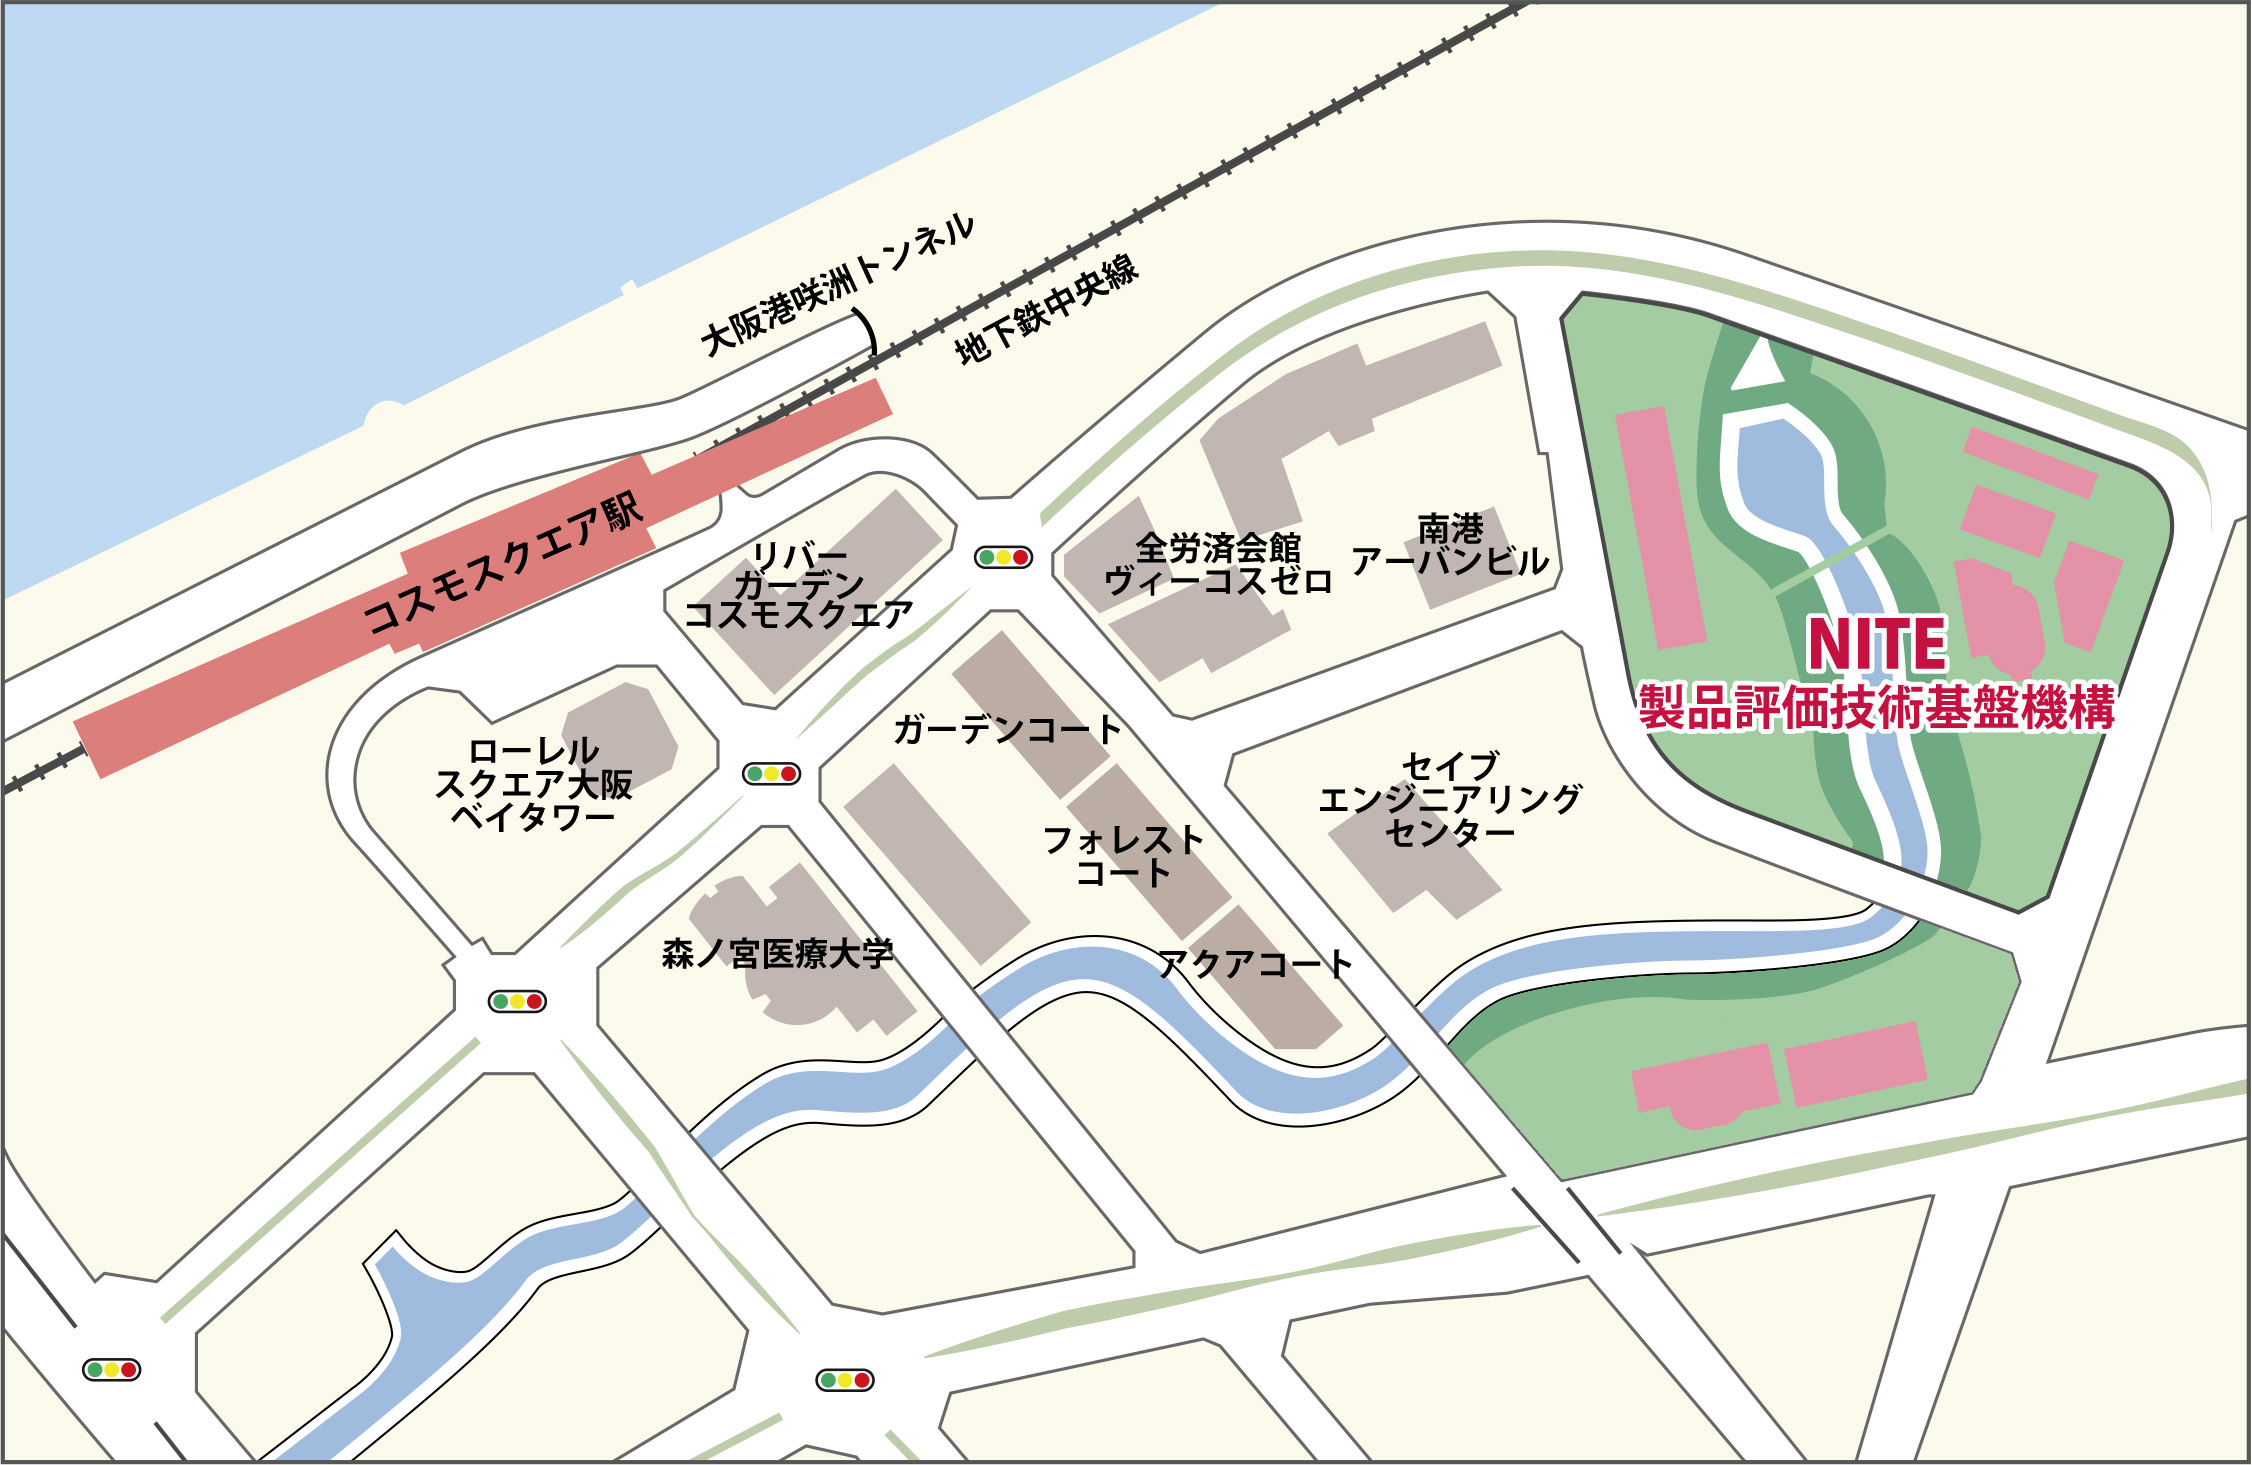 NITE 製品評価技術基盤機構(大阪） 周辺地図